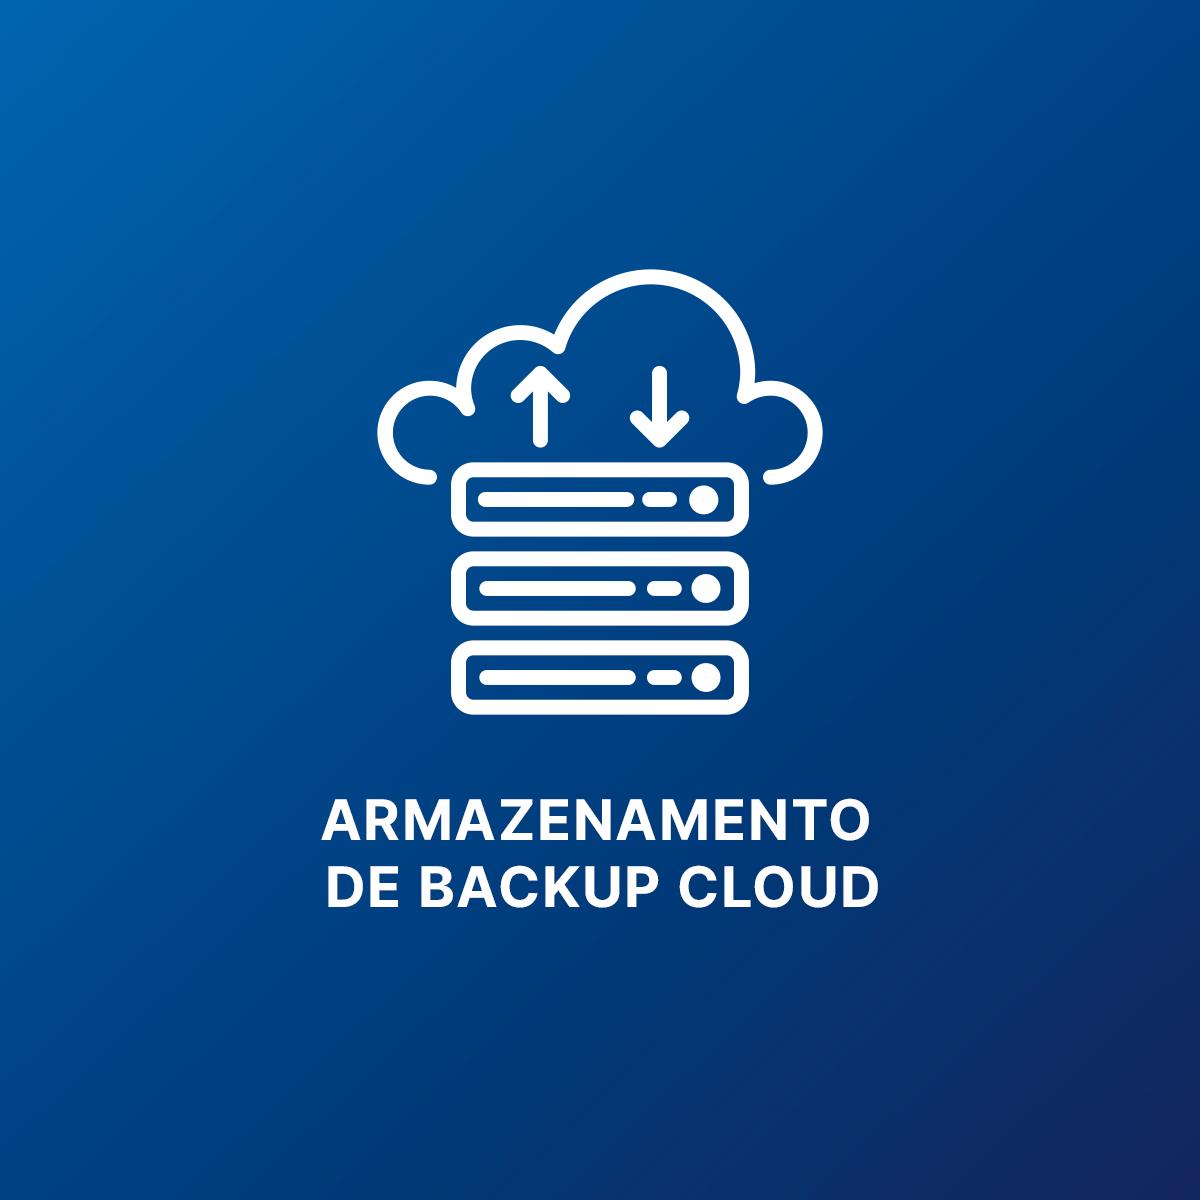 Armazenamento de Backup Cloud